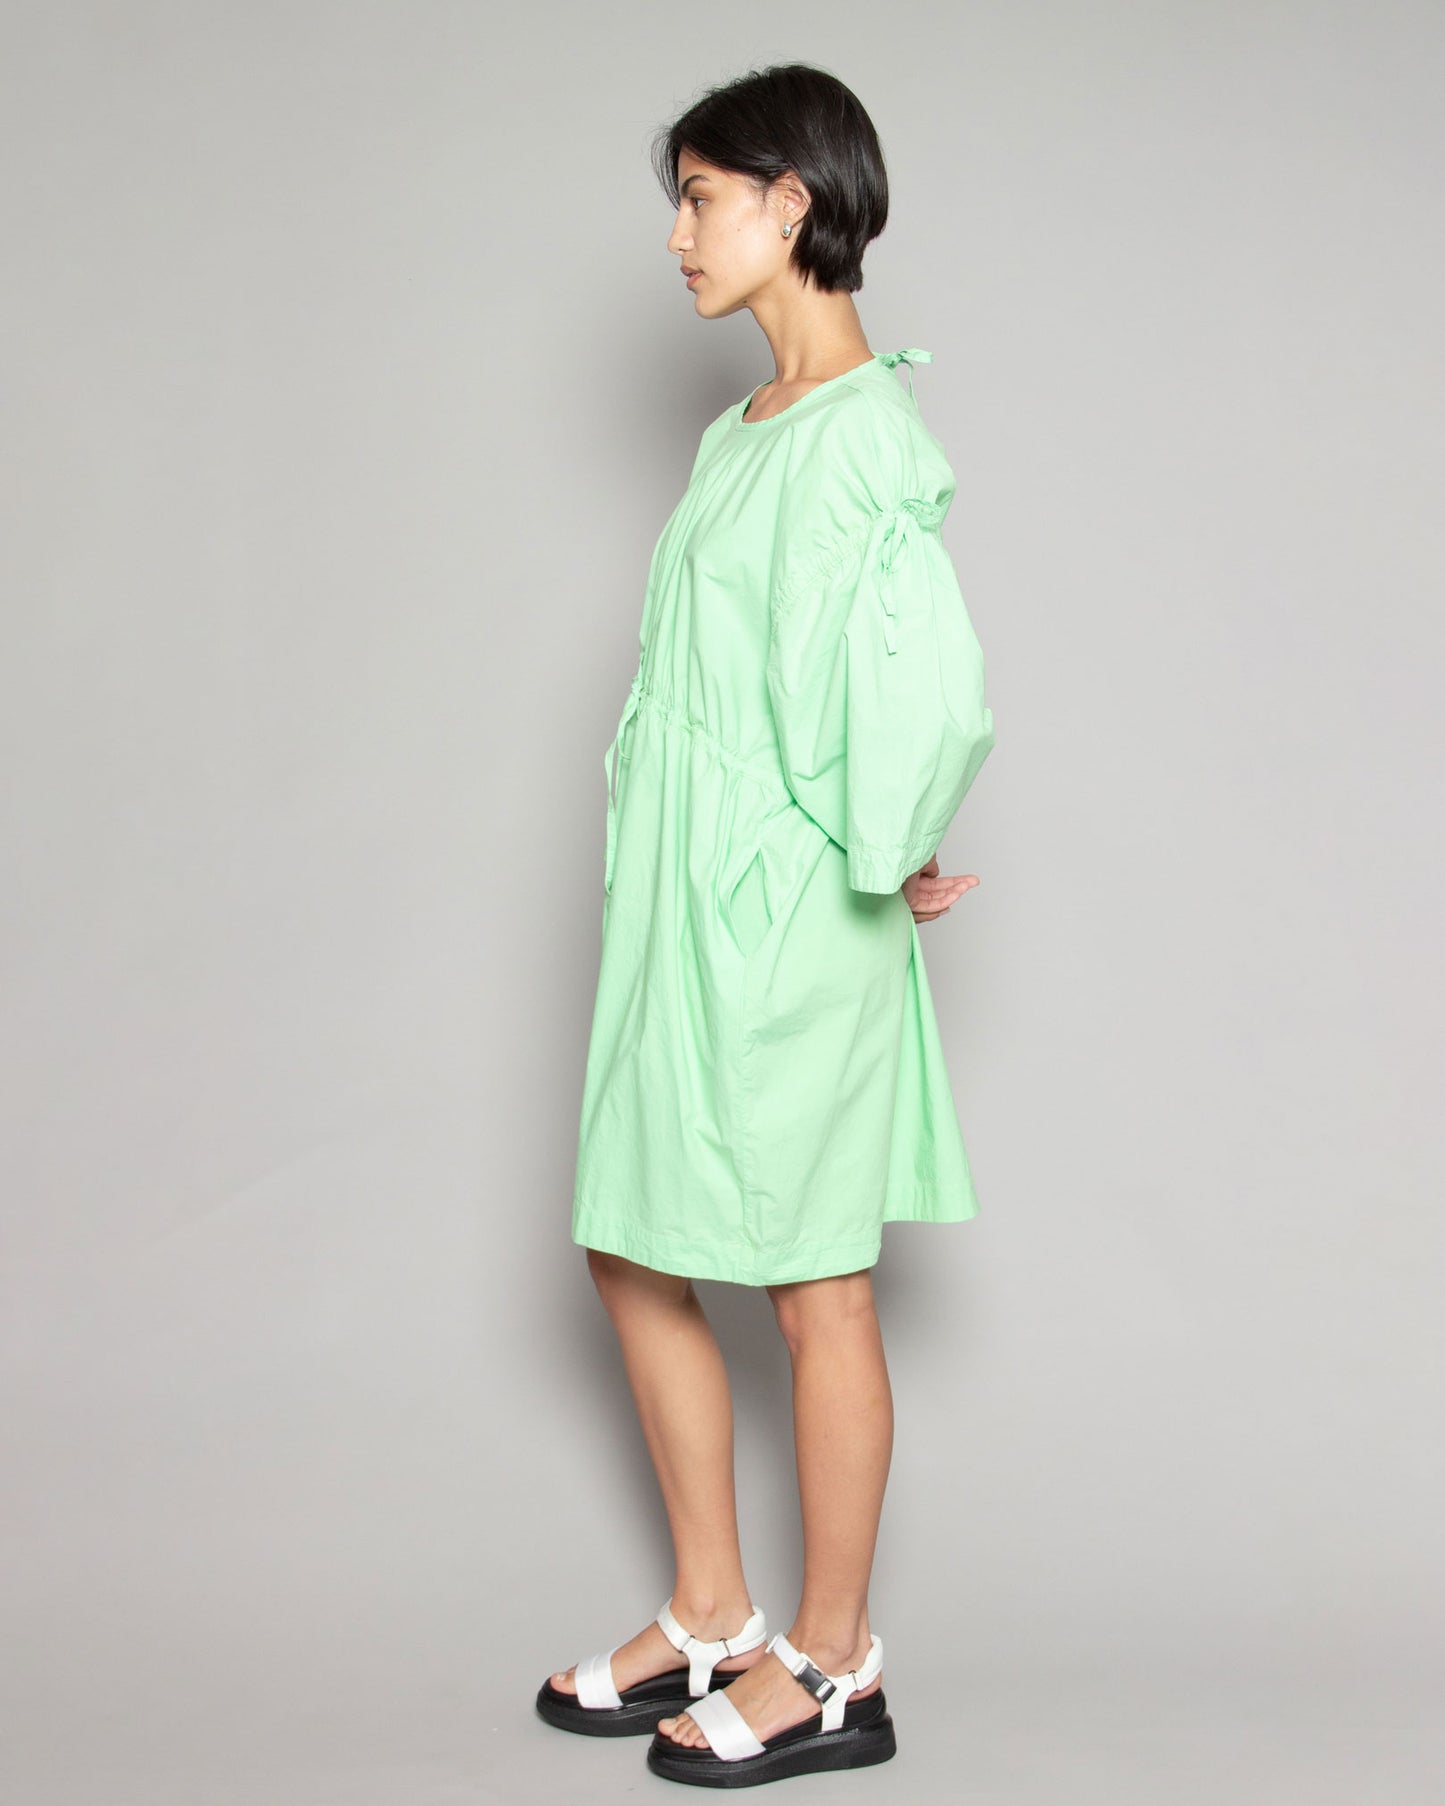 HENRIK VIBSKOV Tapas Dress in Summer Green available at Lahn.shop